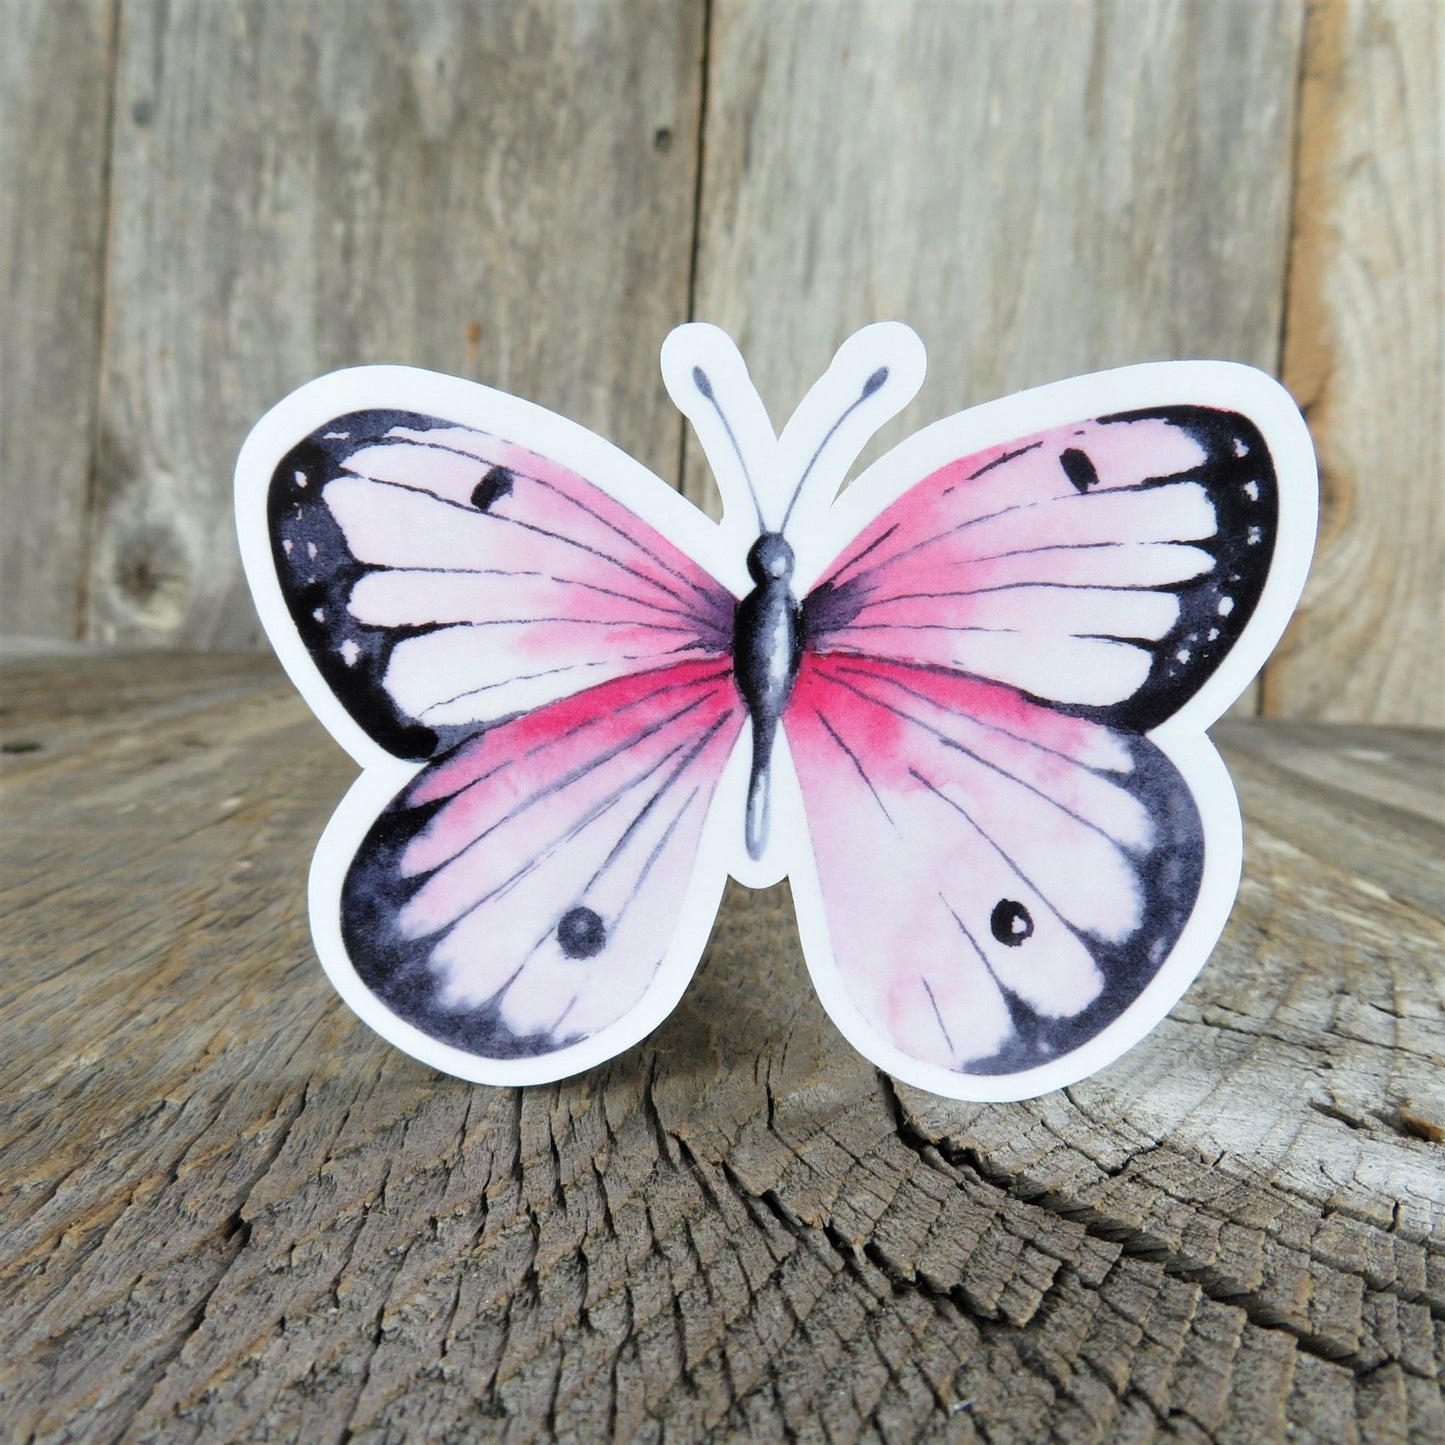 Pink Butterfly Watercolor Sticker Decal Full Color Waterproof Gardener Bugs Floral for Car Water Bottle Laptop Memento